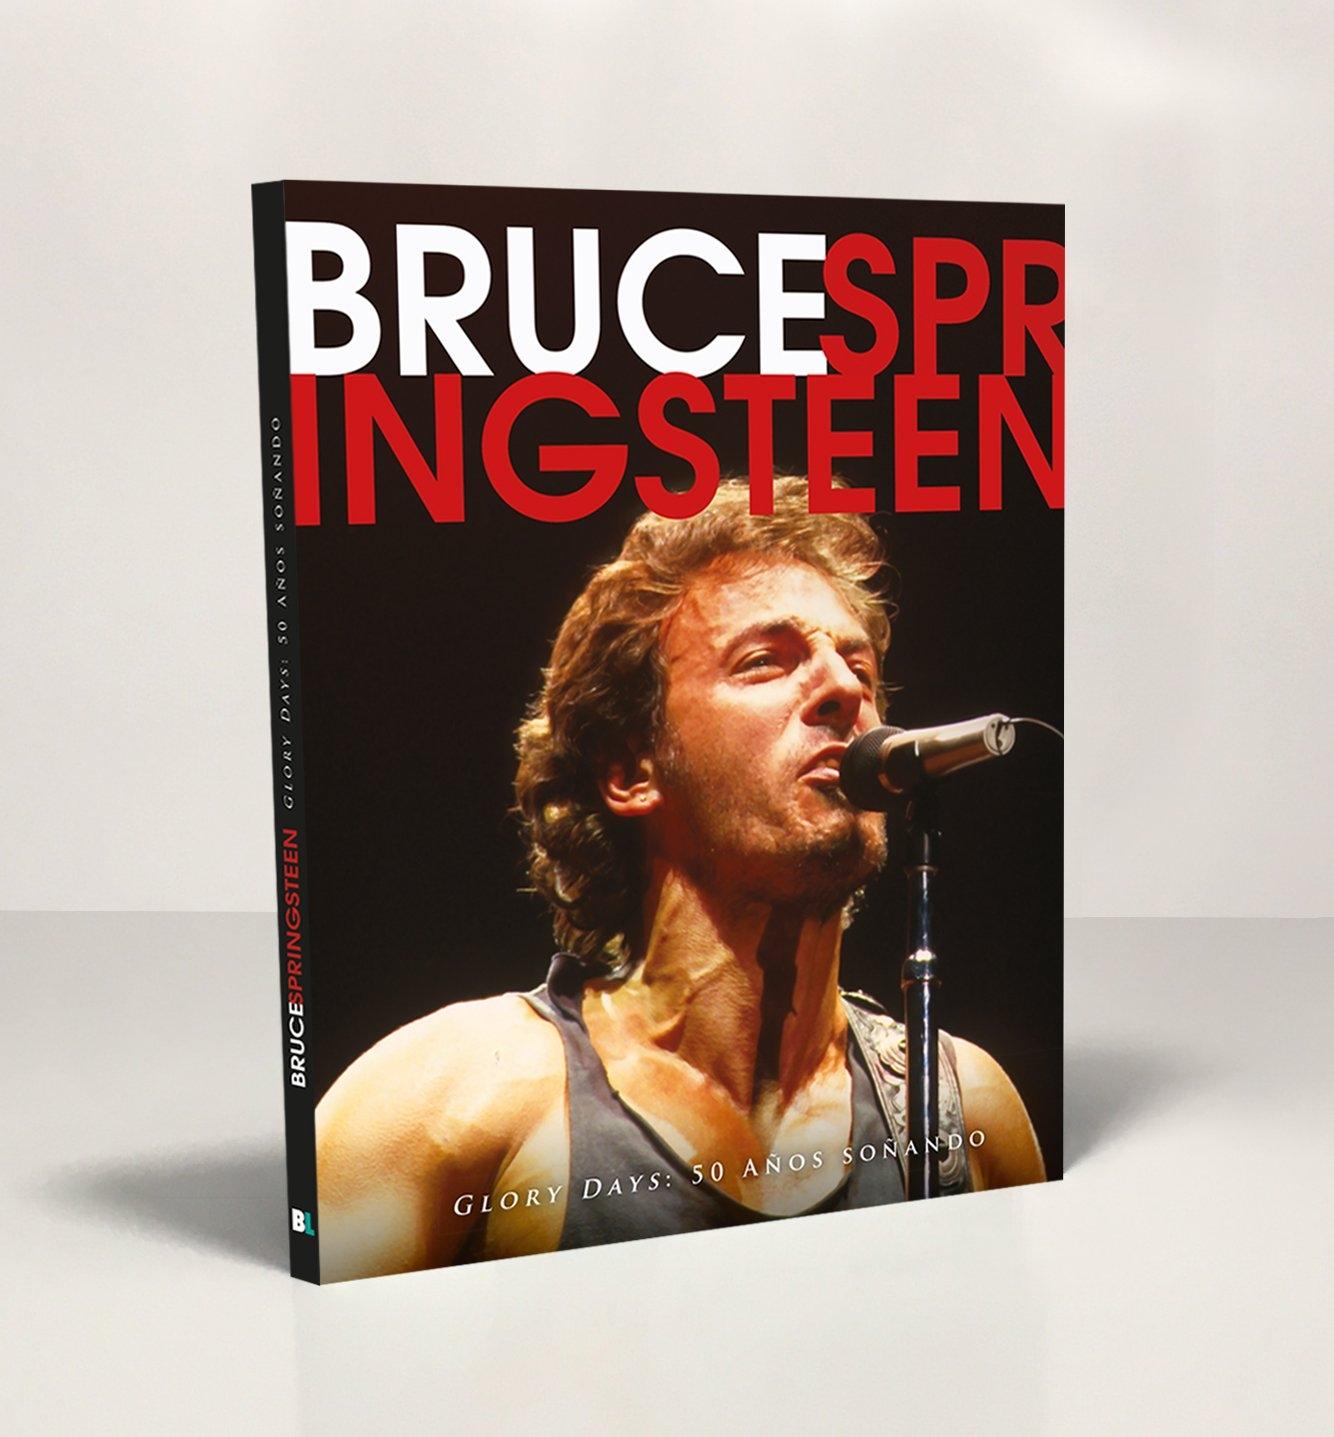 Bruce Springsteen "Glory days: 50 años soñando"